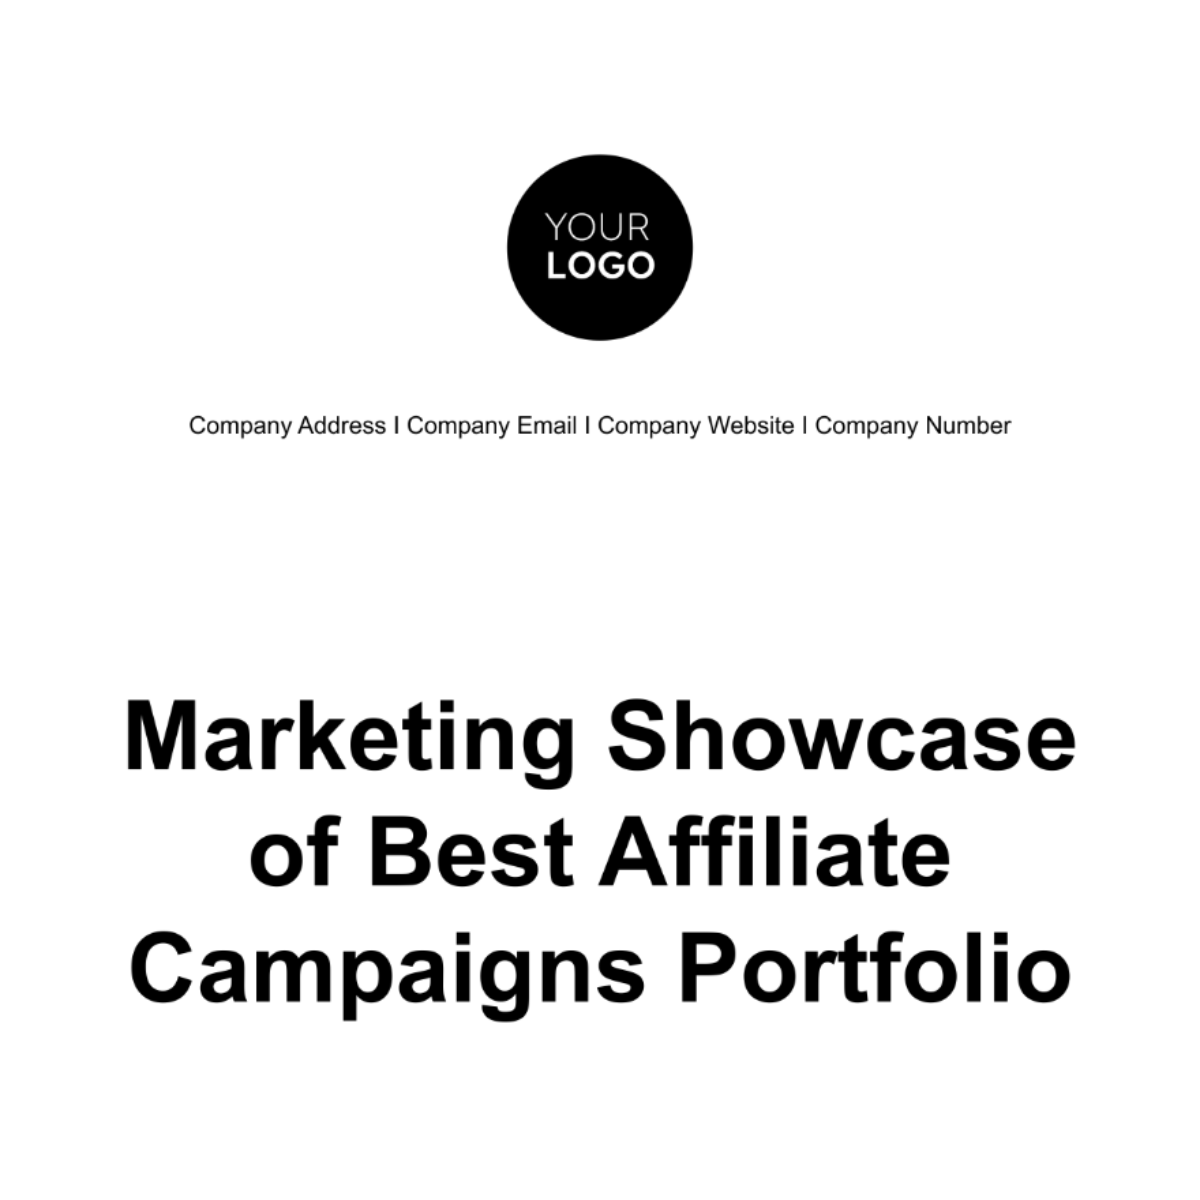 Marketing Showcase of Best Affiliate Campaigns Portfolio Template